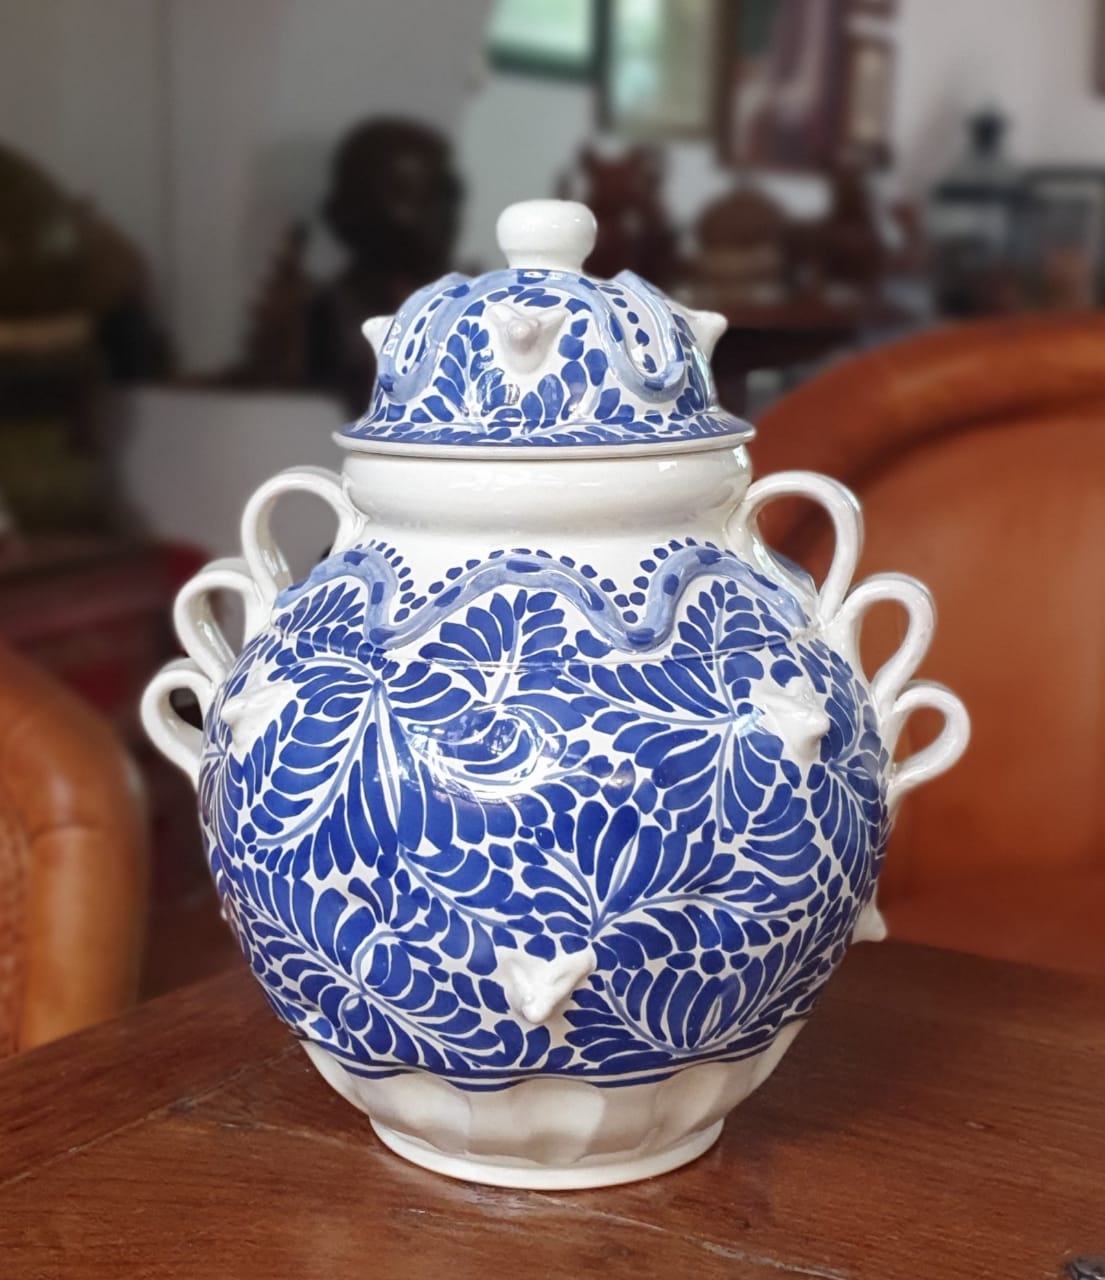 Decorative Vase w/Doggy Face Milestones Pattern Blue and White